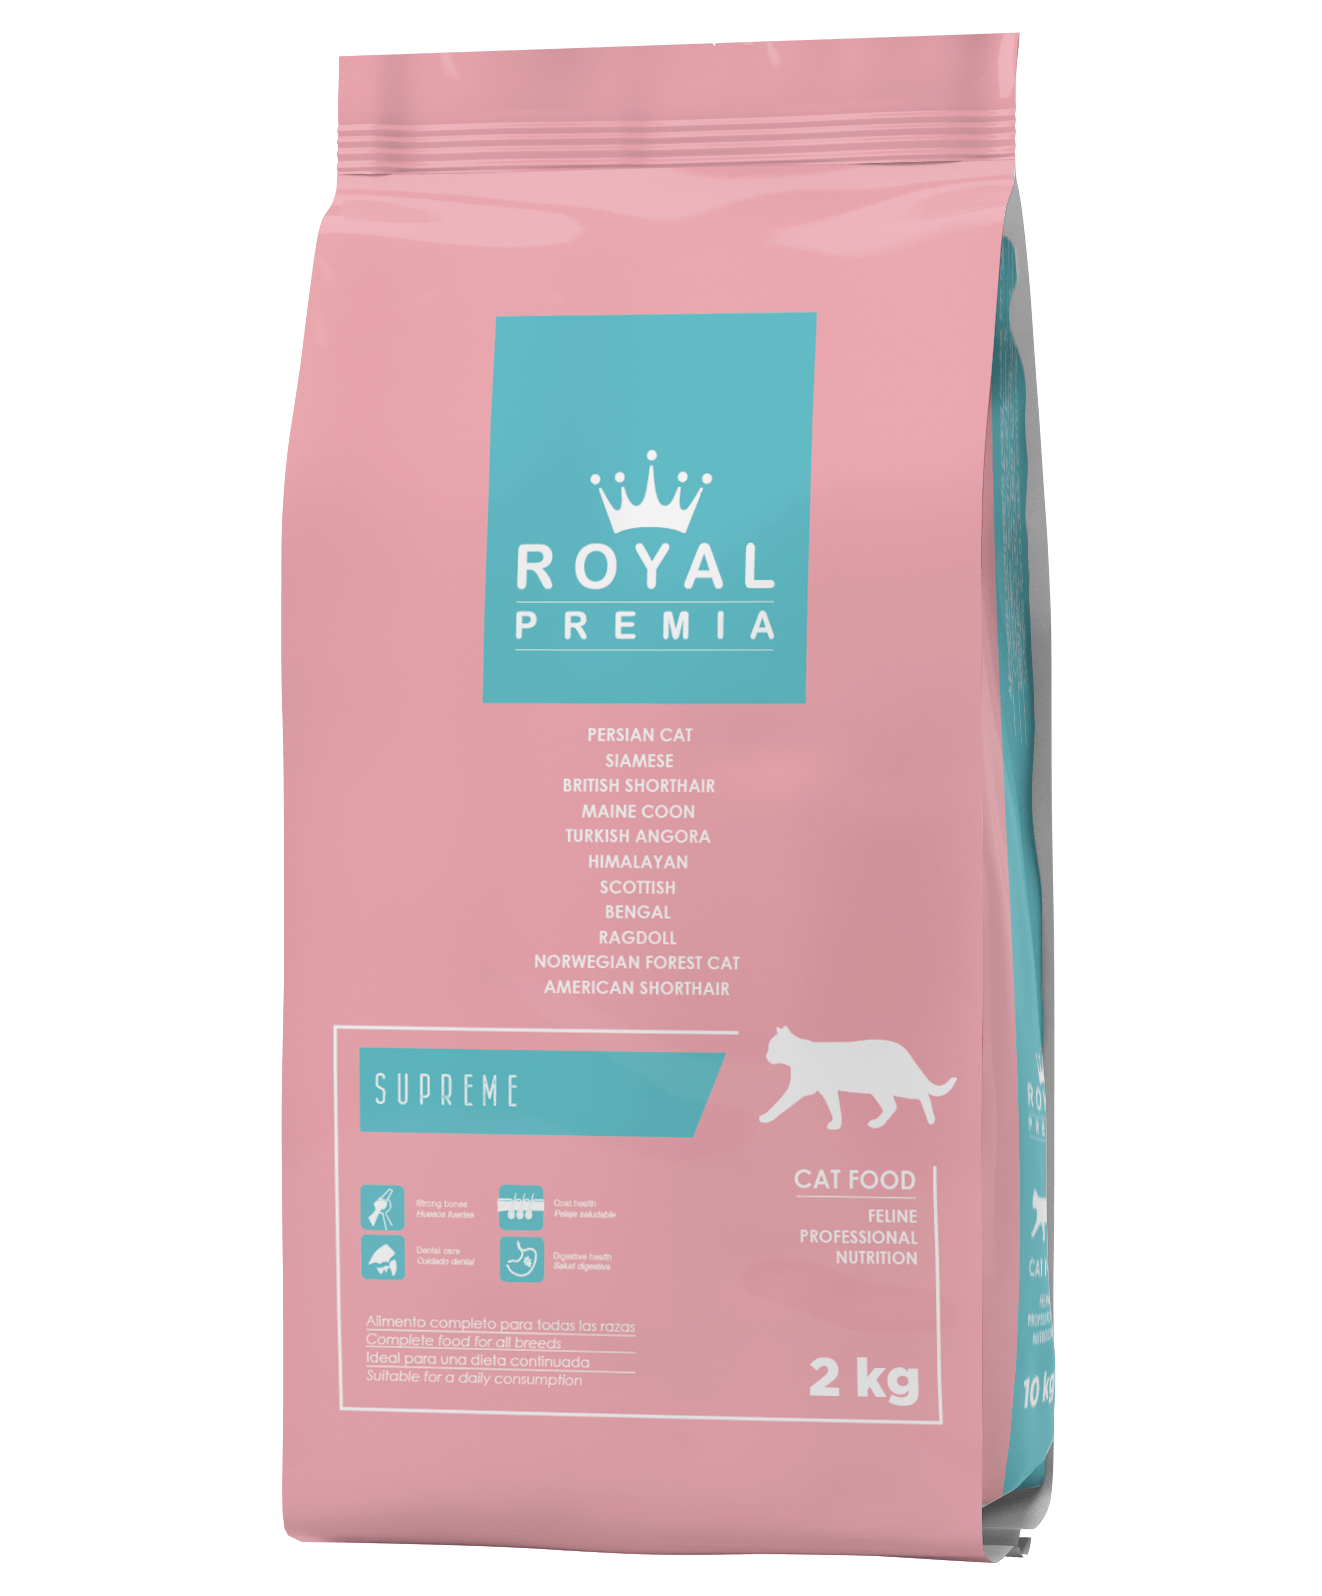 Royal Premia Dry Cat food 2kg Sharjah, Dubai